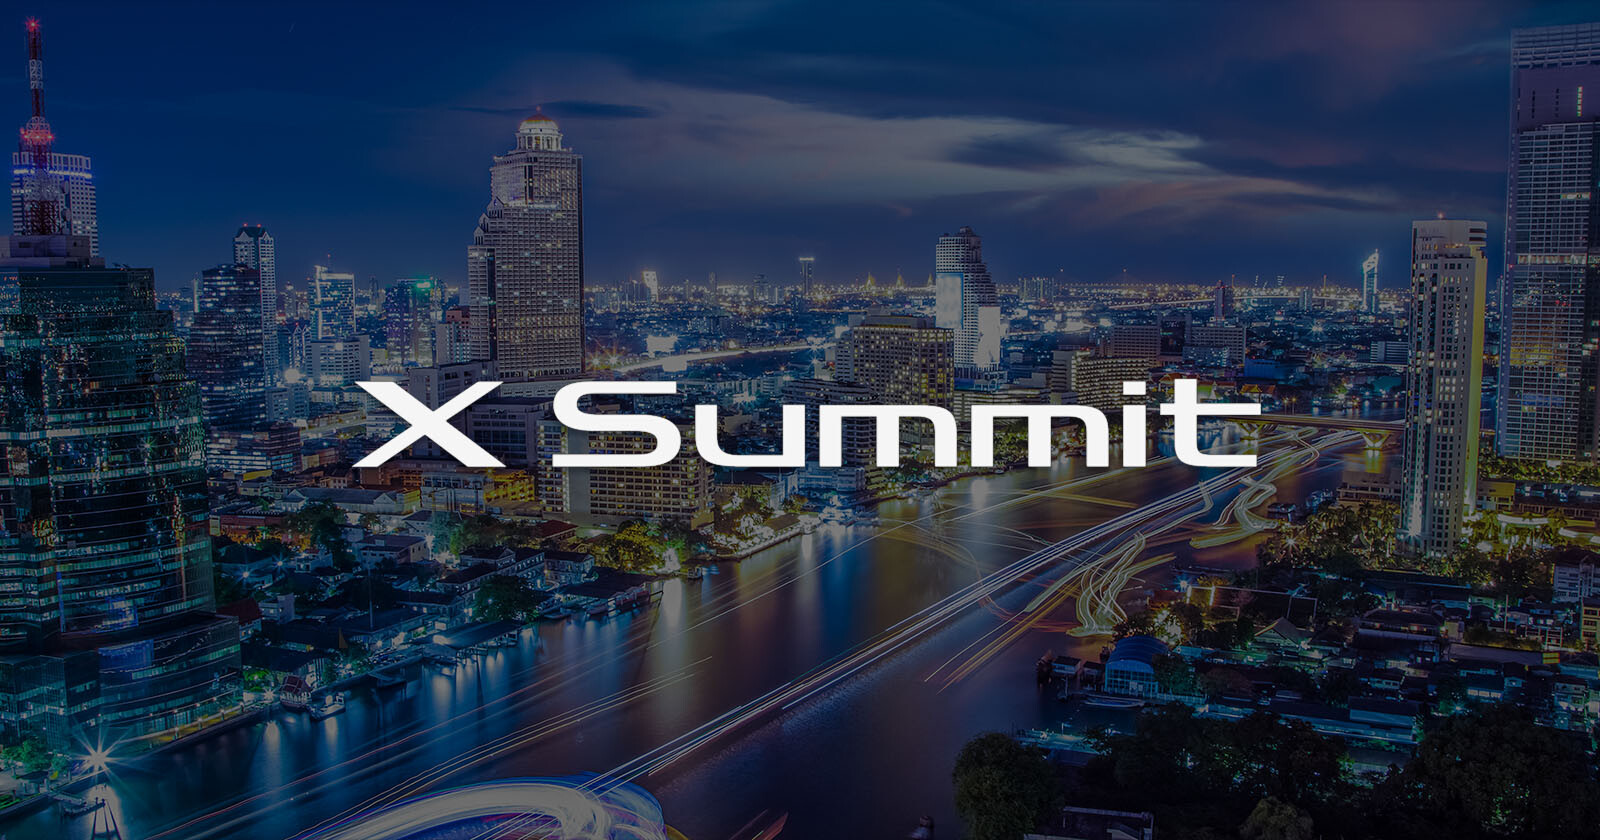 Fujifilms X Summit and Fujikina Events Will Be Held in Bangkok in May